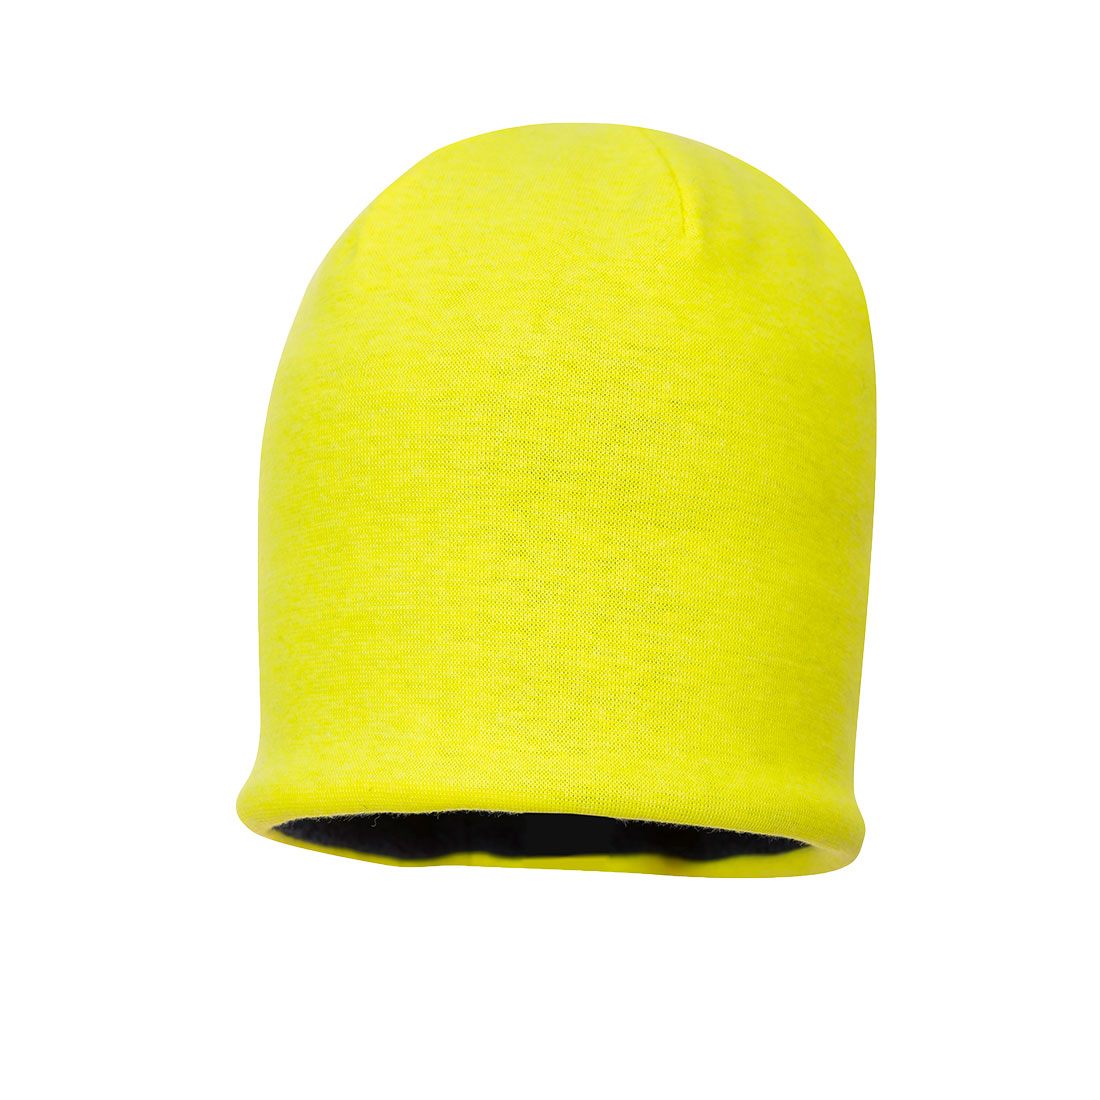 FR17 Portwest® Modaflame® FR/AR Hi-Vis Knit Beanie Hats